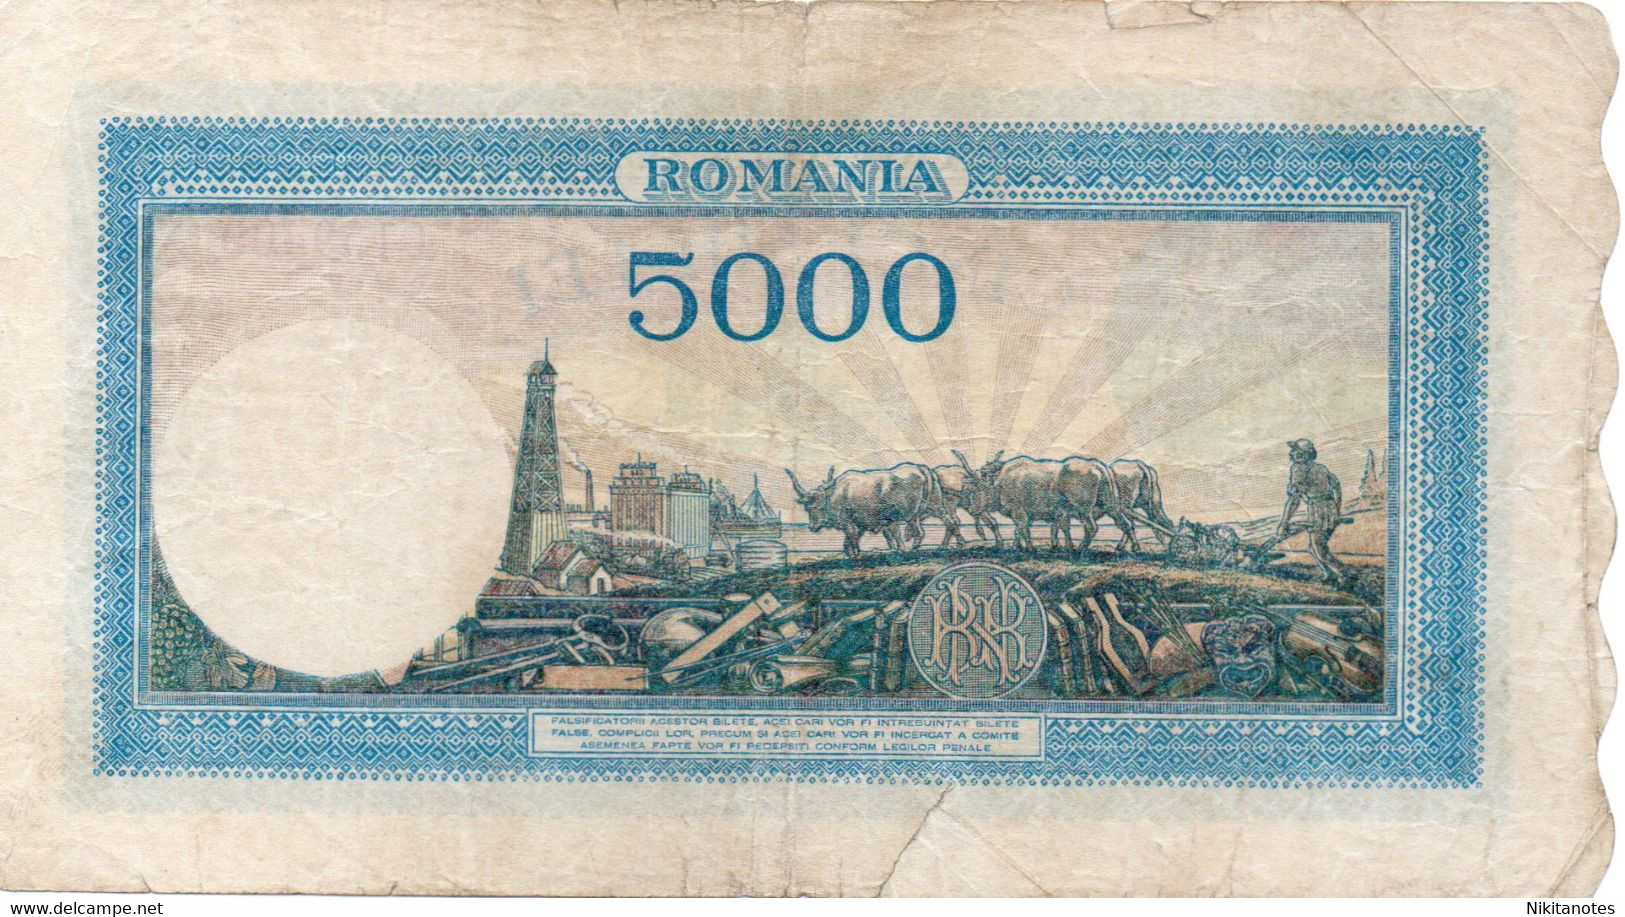 1945 28 SEPT ROMANIA Banconote 5000 Lei Note See Scan - Rumania